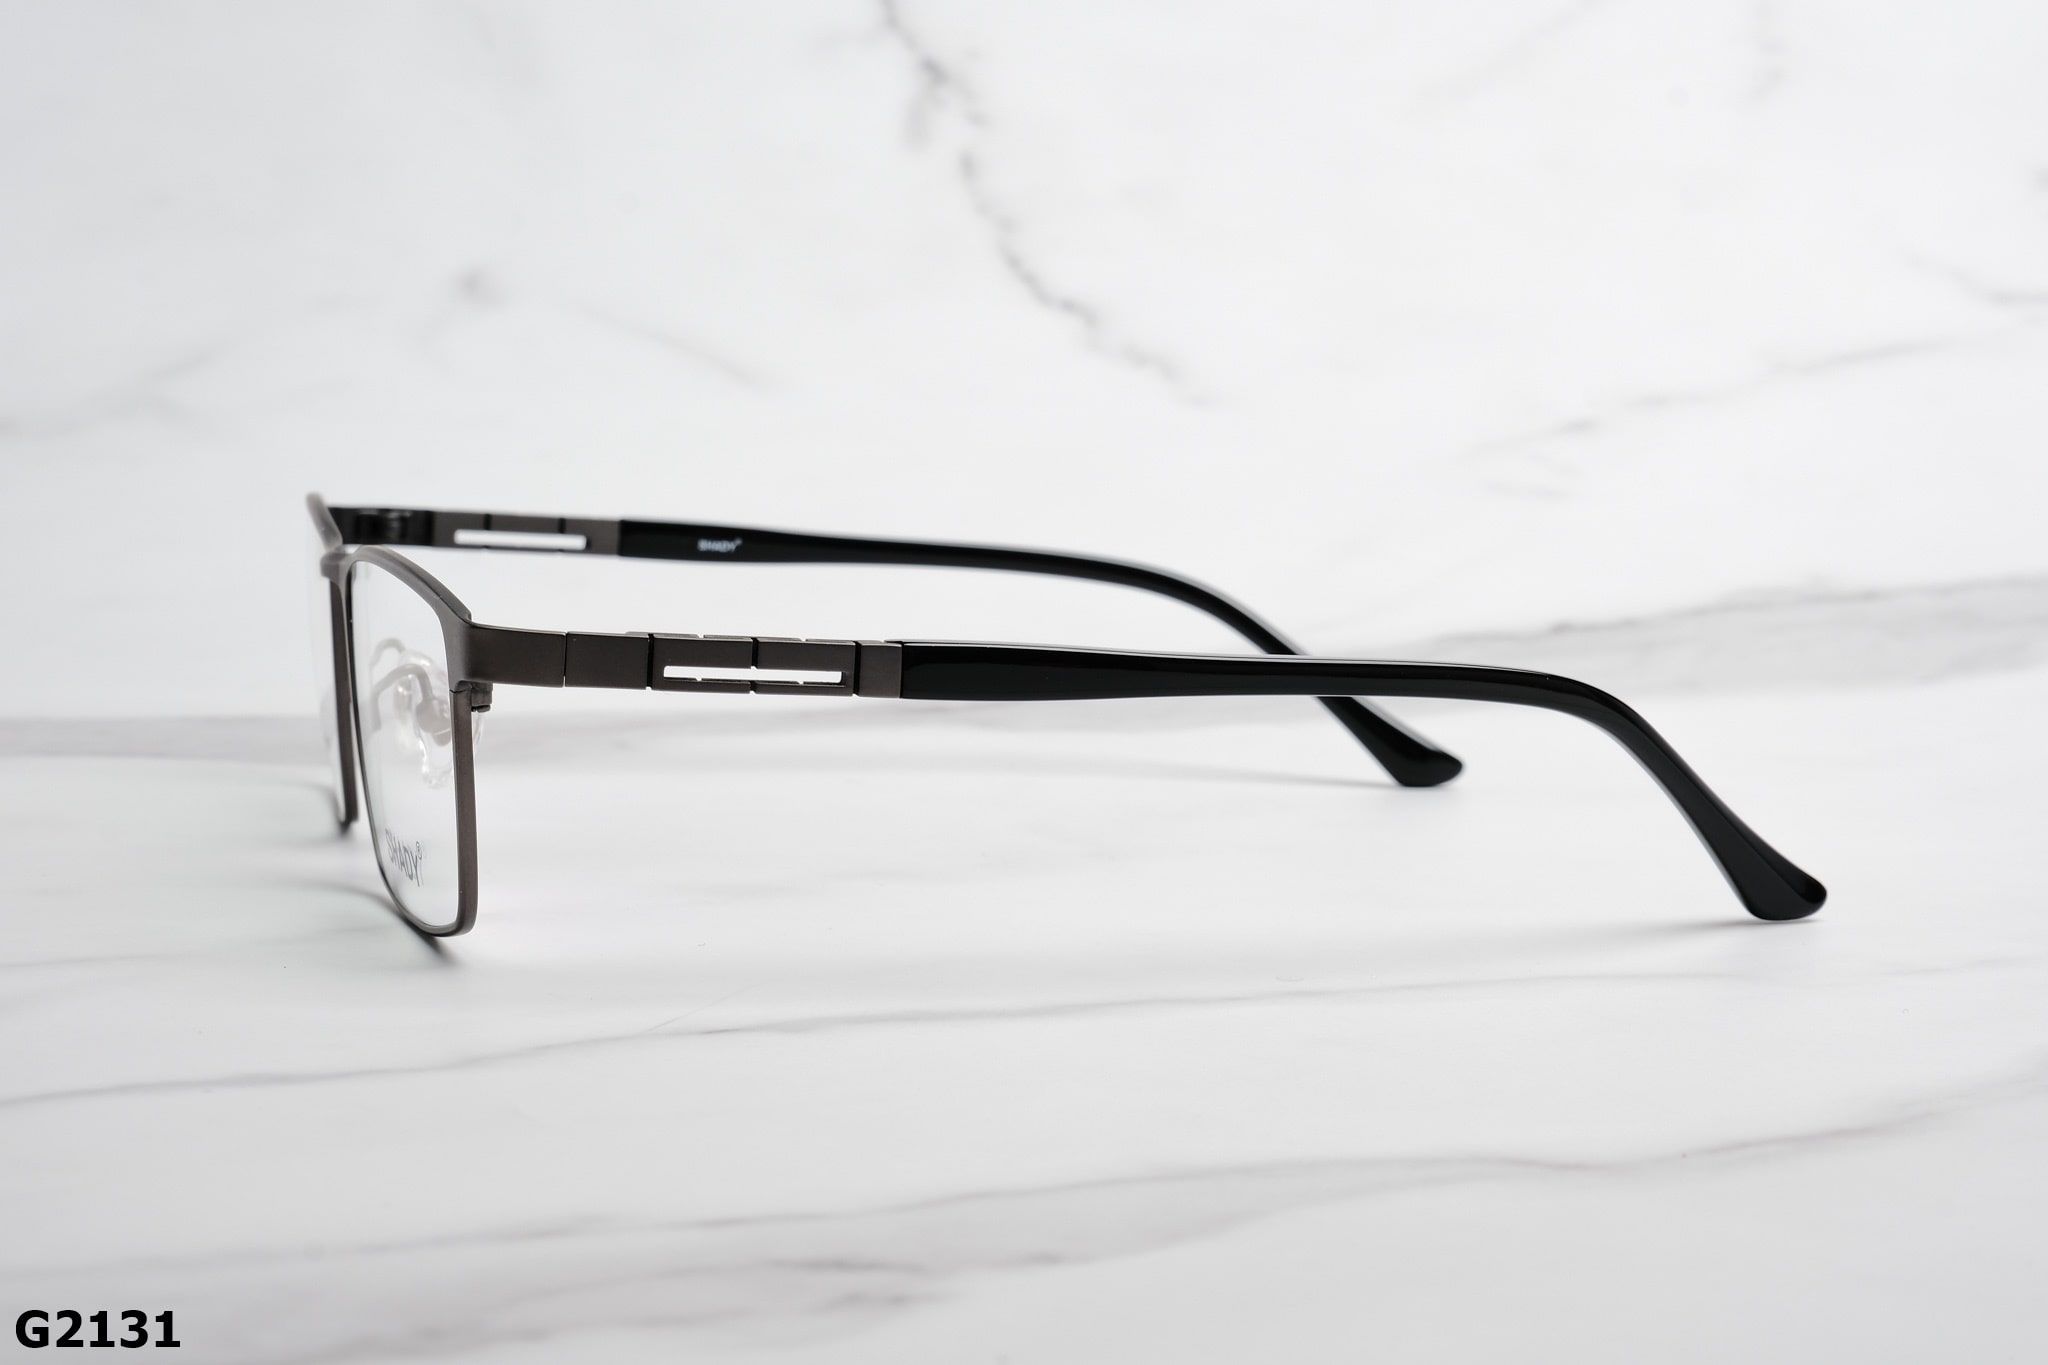  SHADY Eyewear - Glasses - G2131 